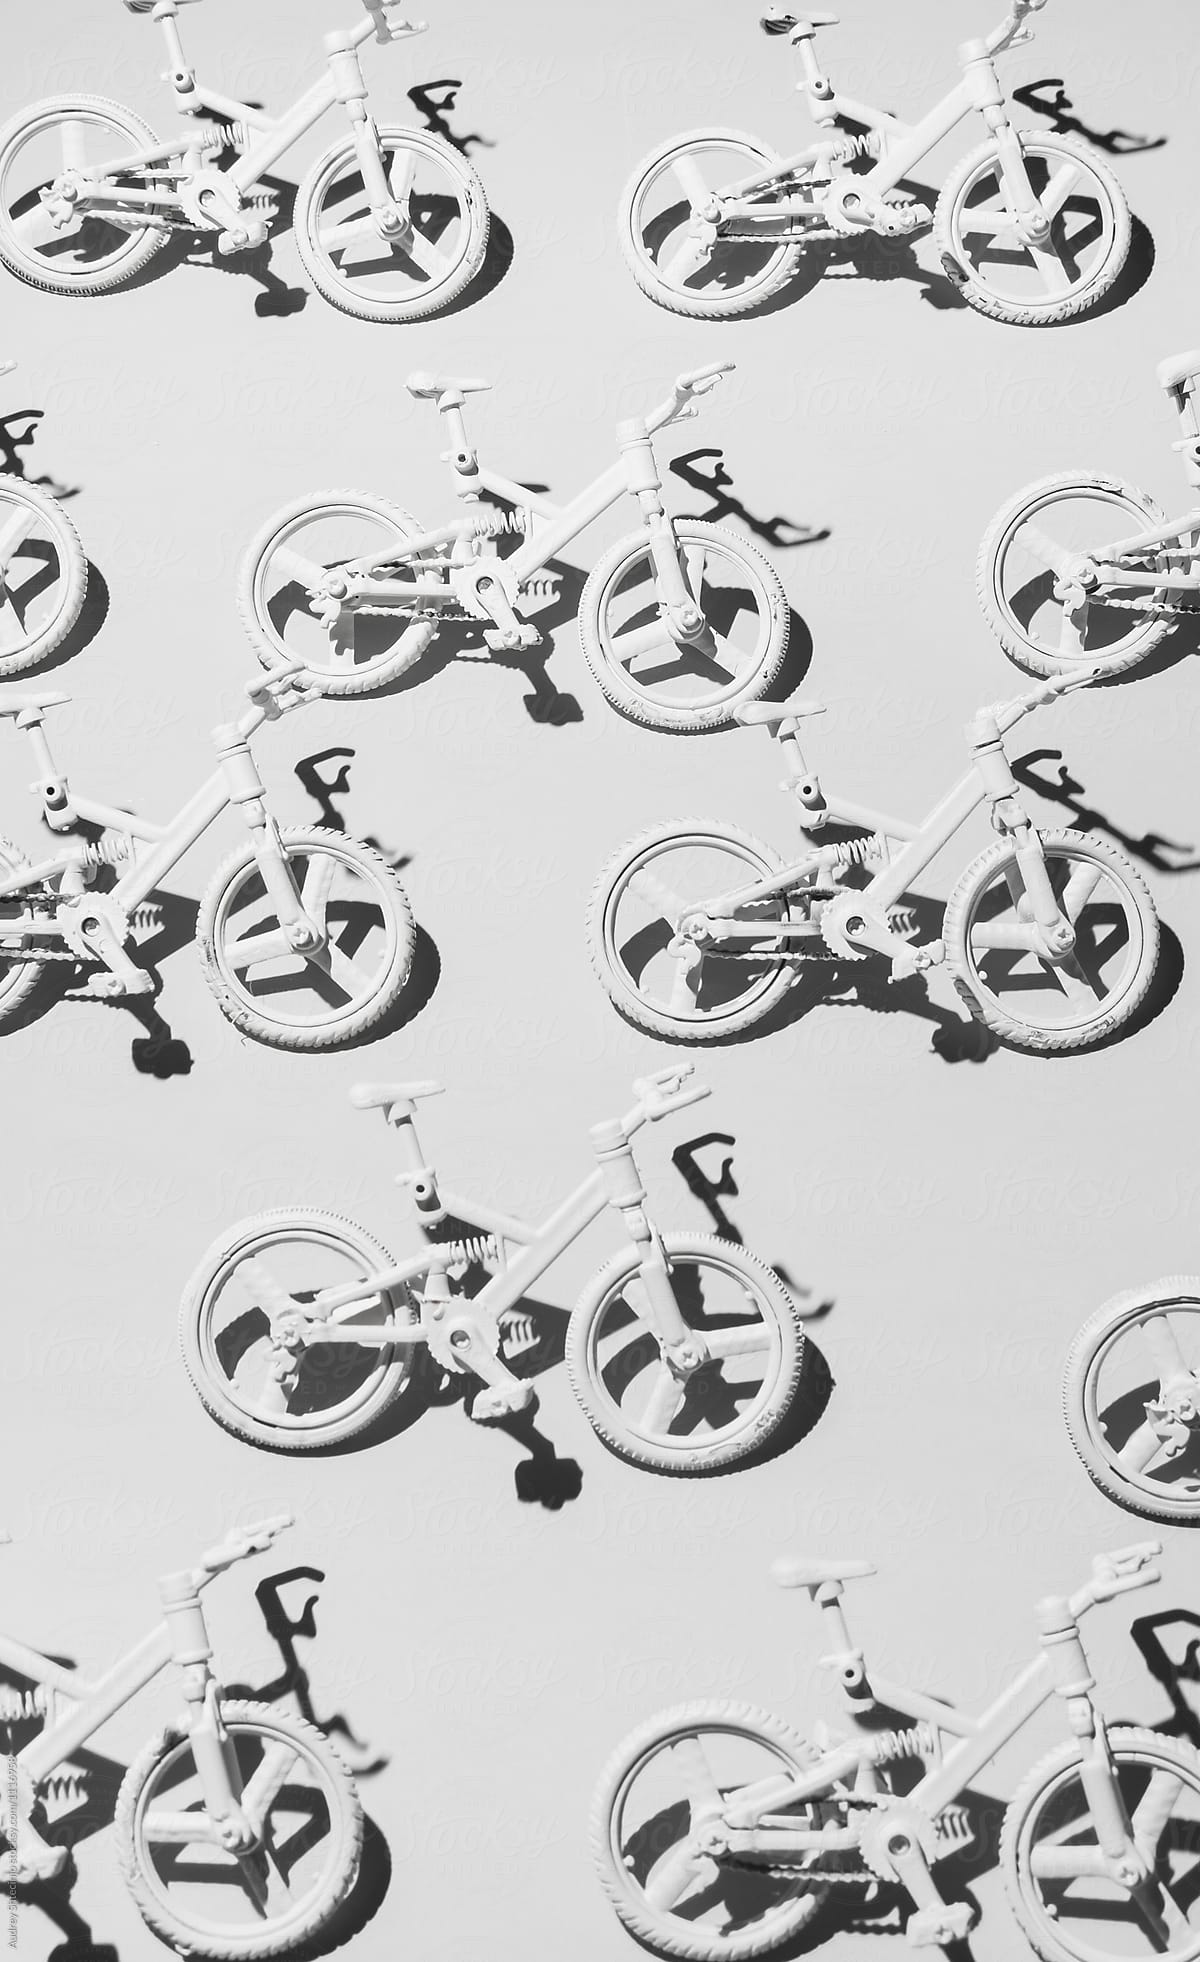 White bicycle miniatures on white background.